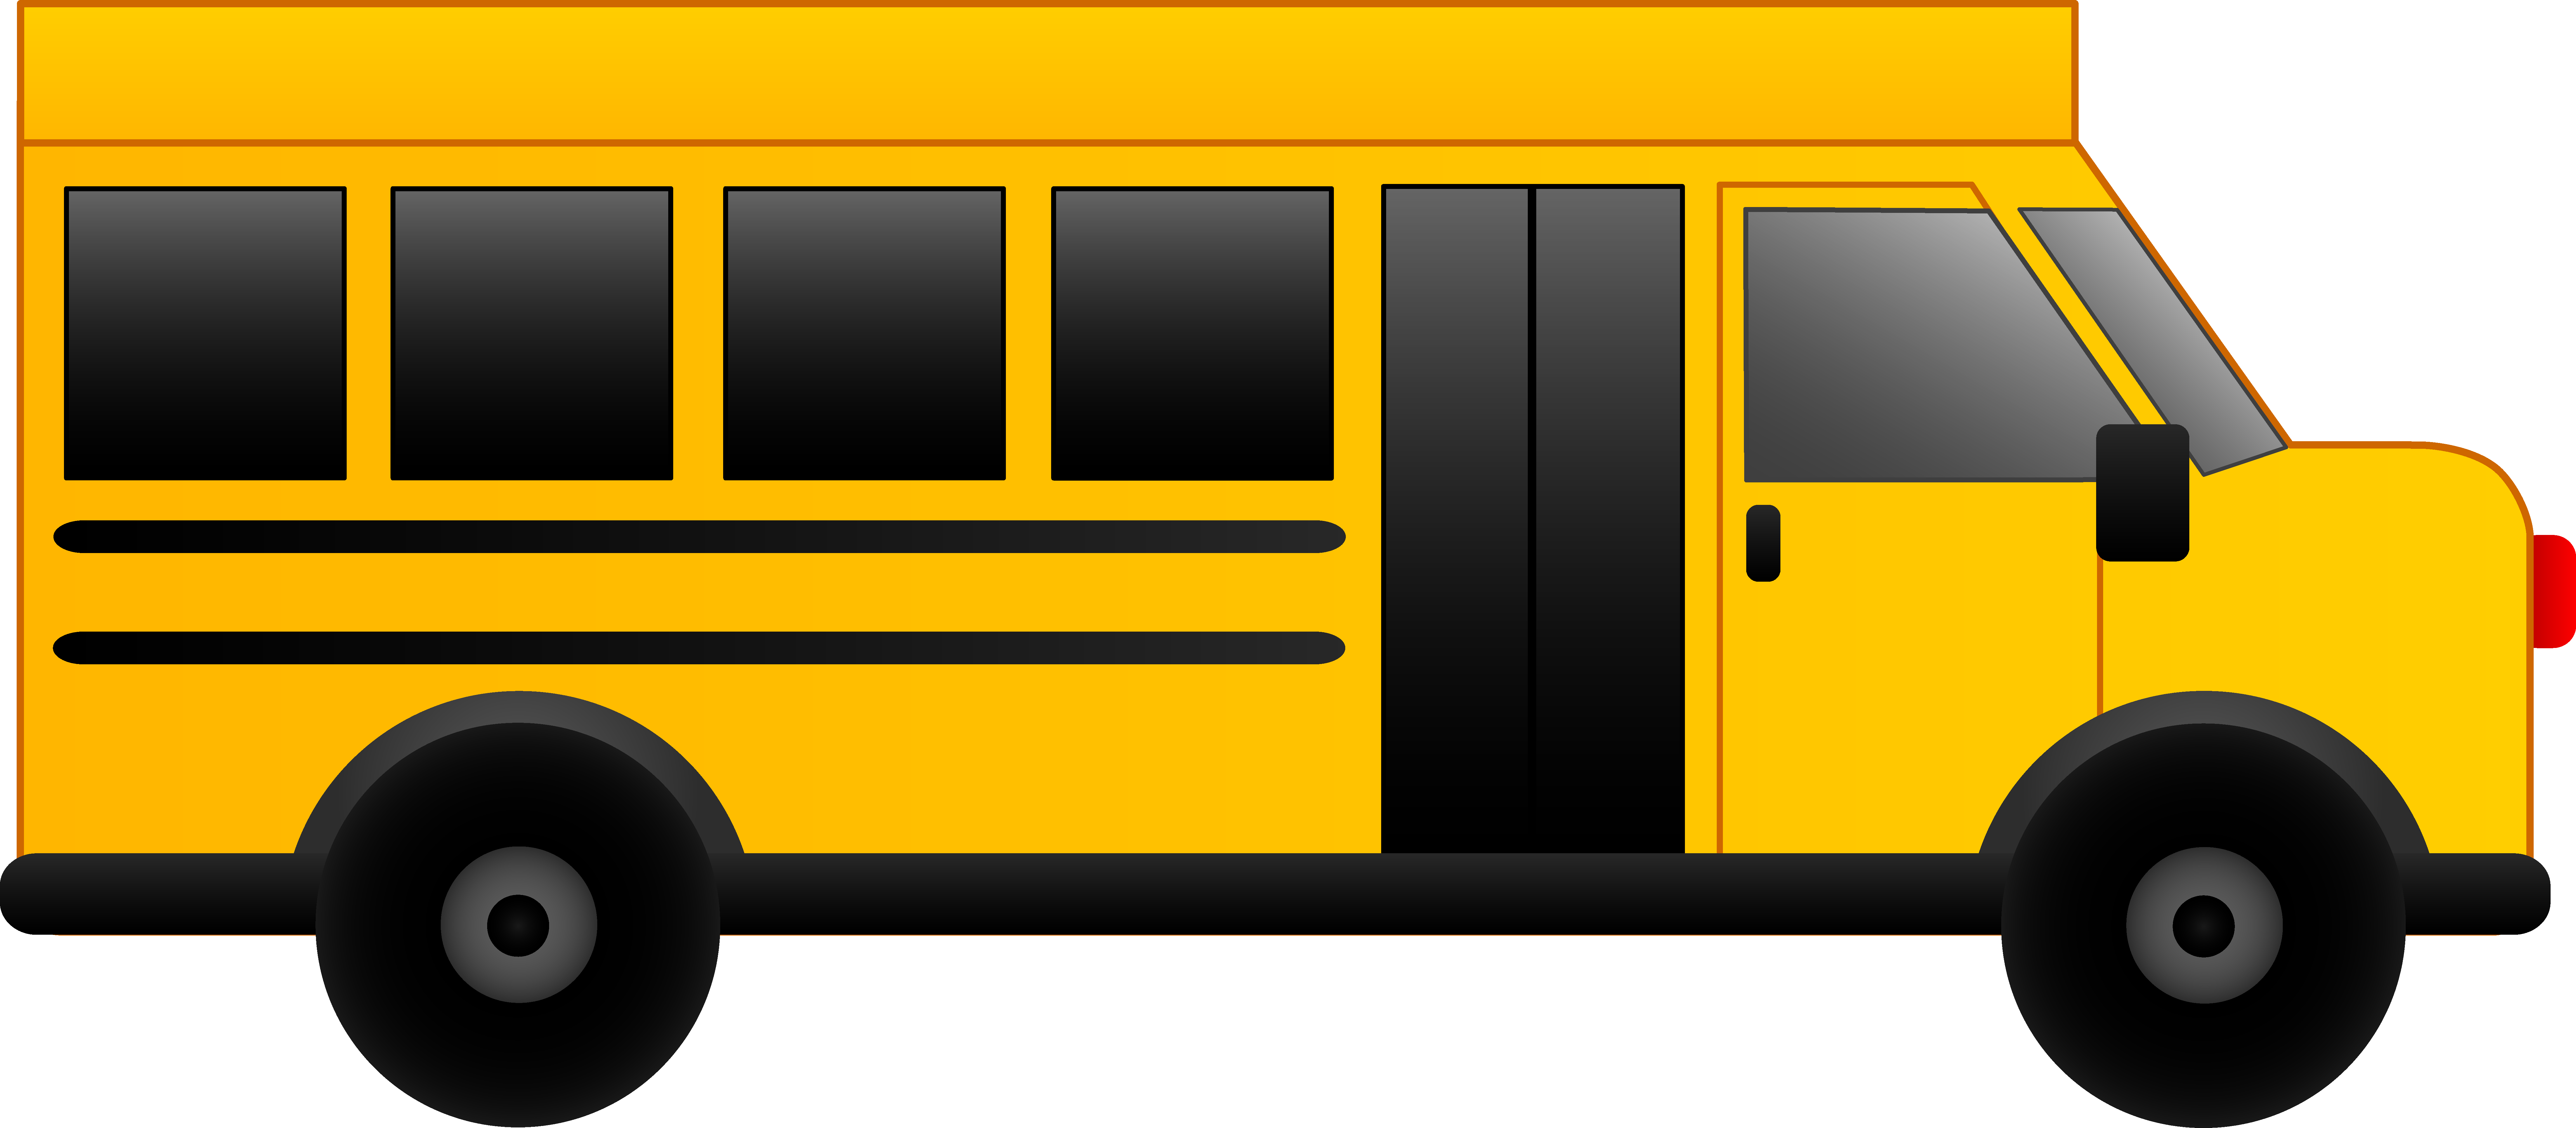 Clipart School Bus - Cliparts.co